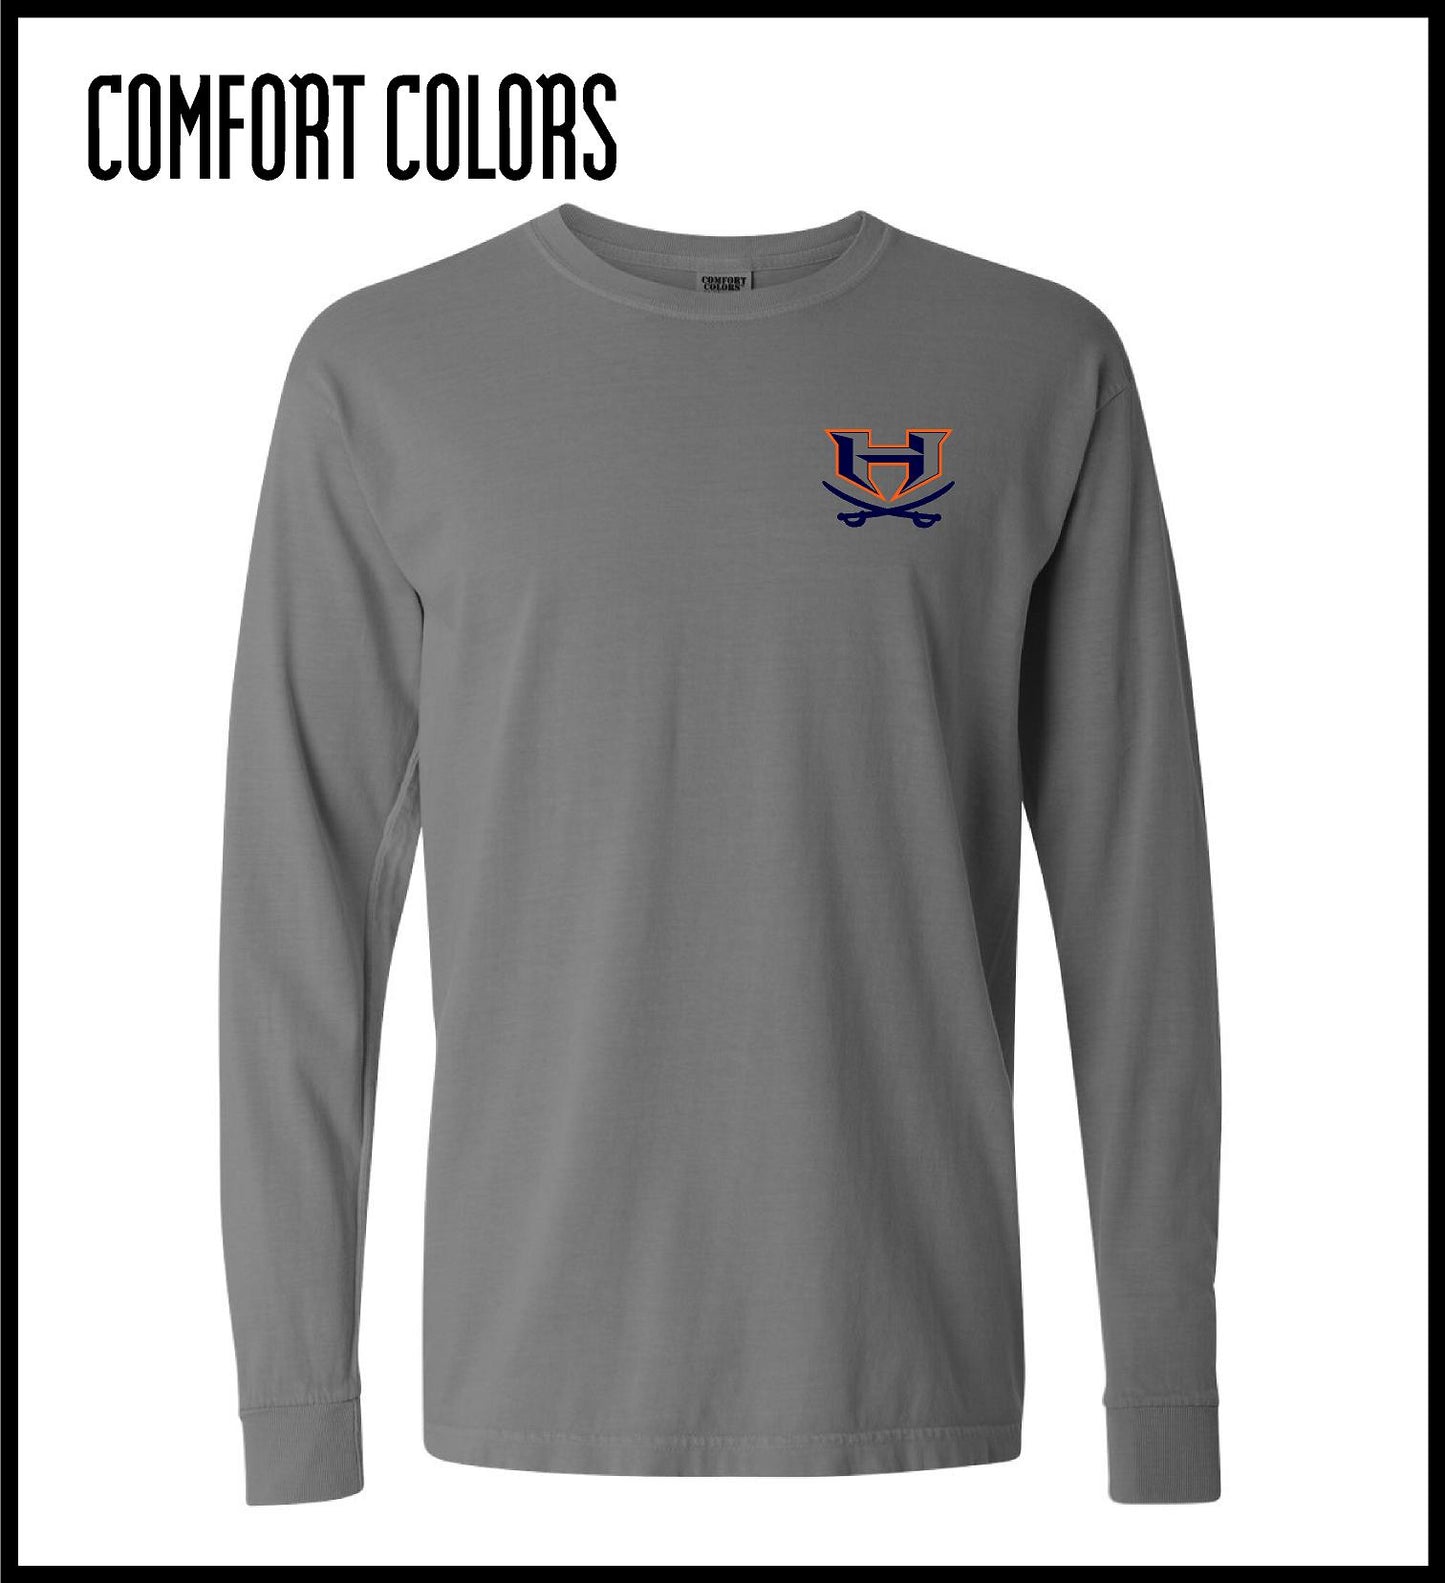 Comfort Colors Long Sleeve Tee 05